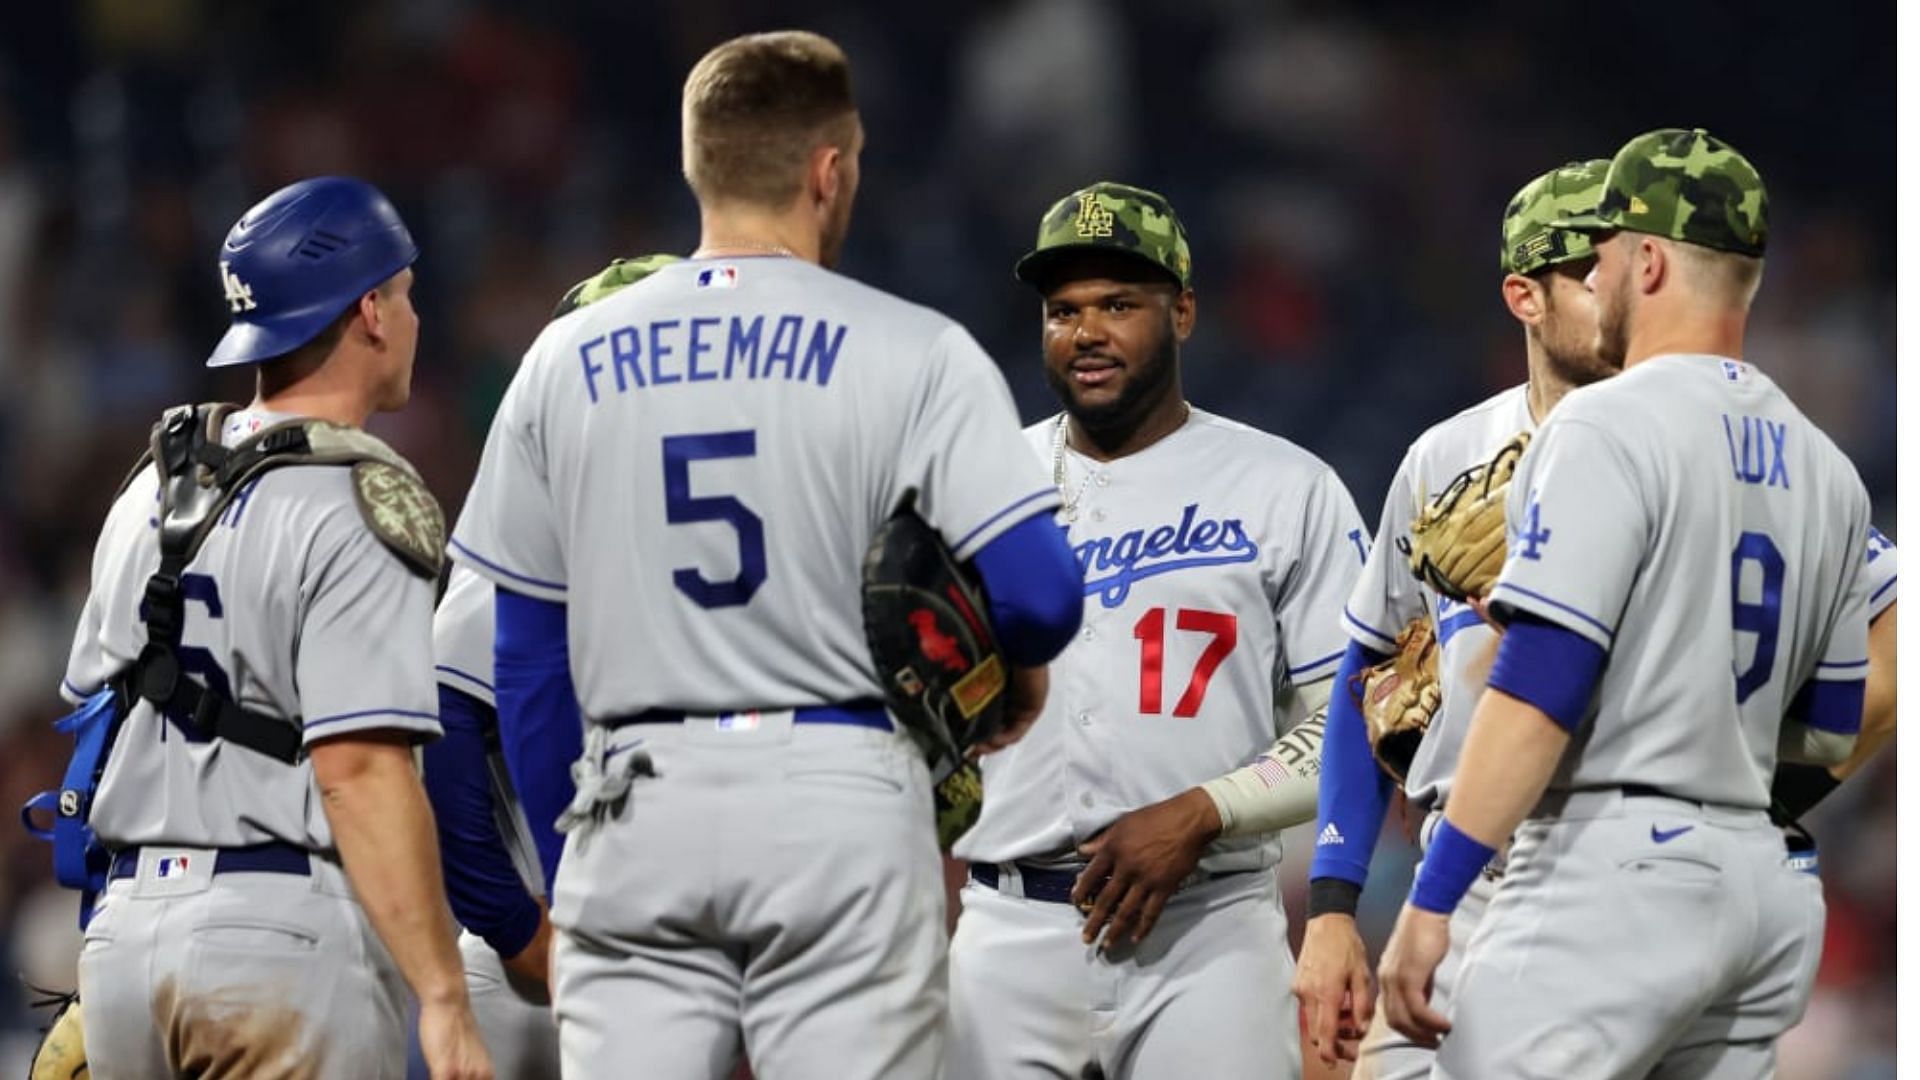 Green Camo Caps Worn Across MLB This Weekend – SportsLogos.Net News